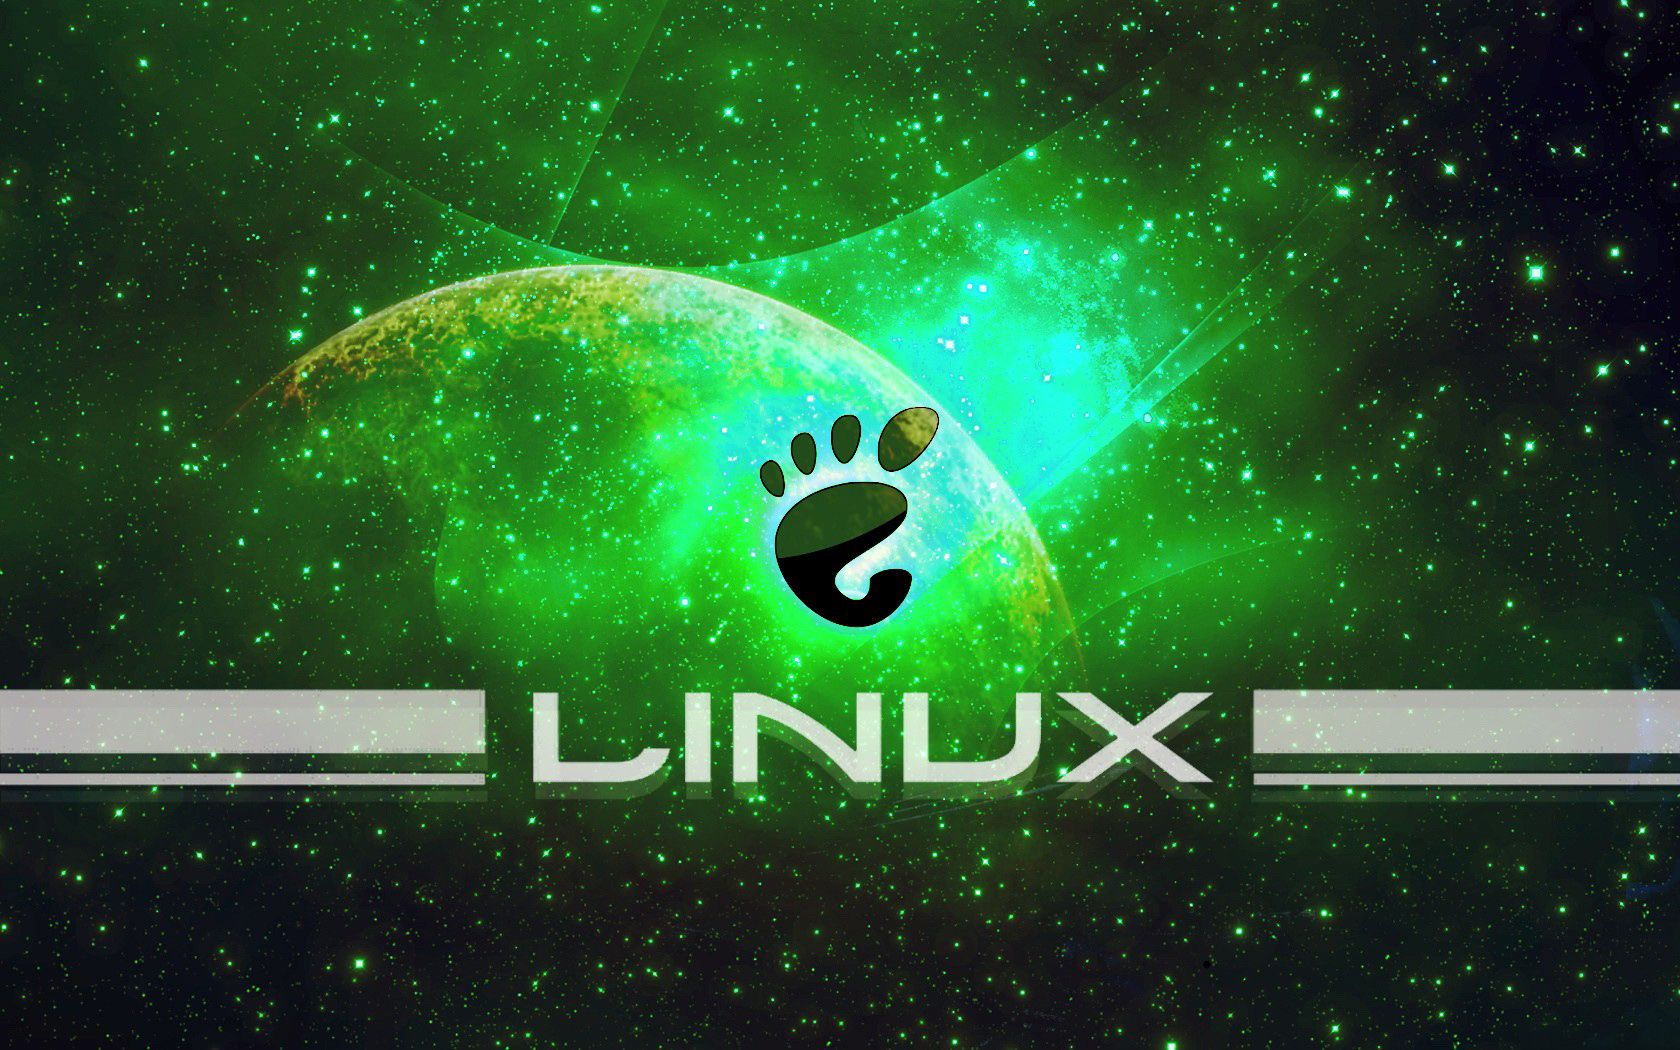 Download Wallpaper Linux Hd 1680x1050 Wallpaper Teahub Io